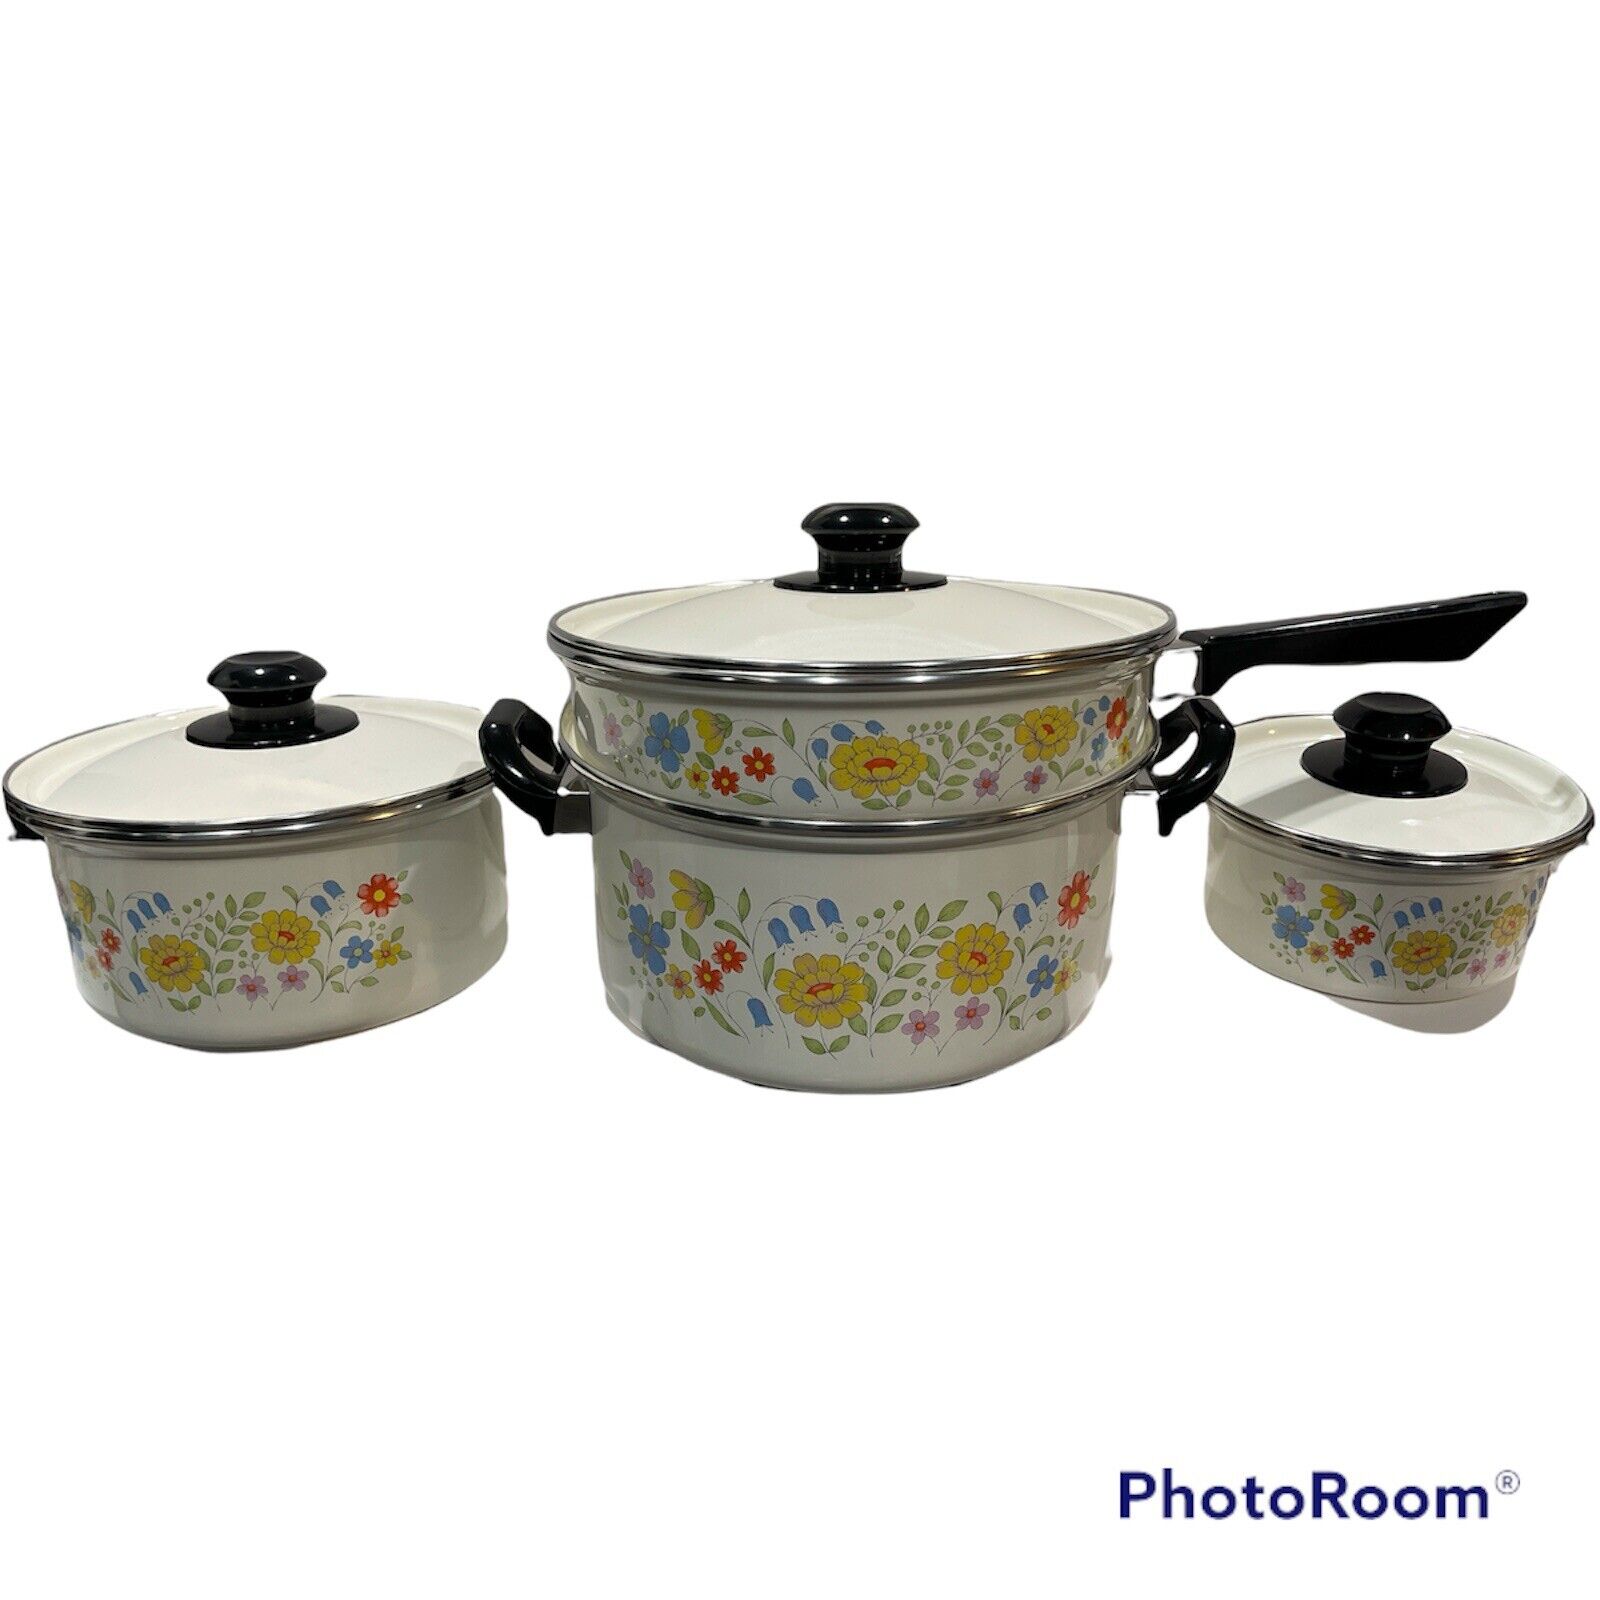 New Sunny Floral 1970s 7pc vintage porcelain enamel cookware set